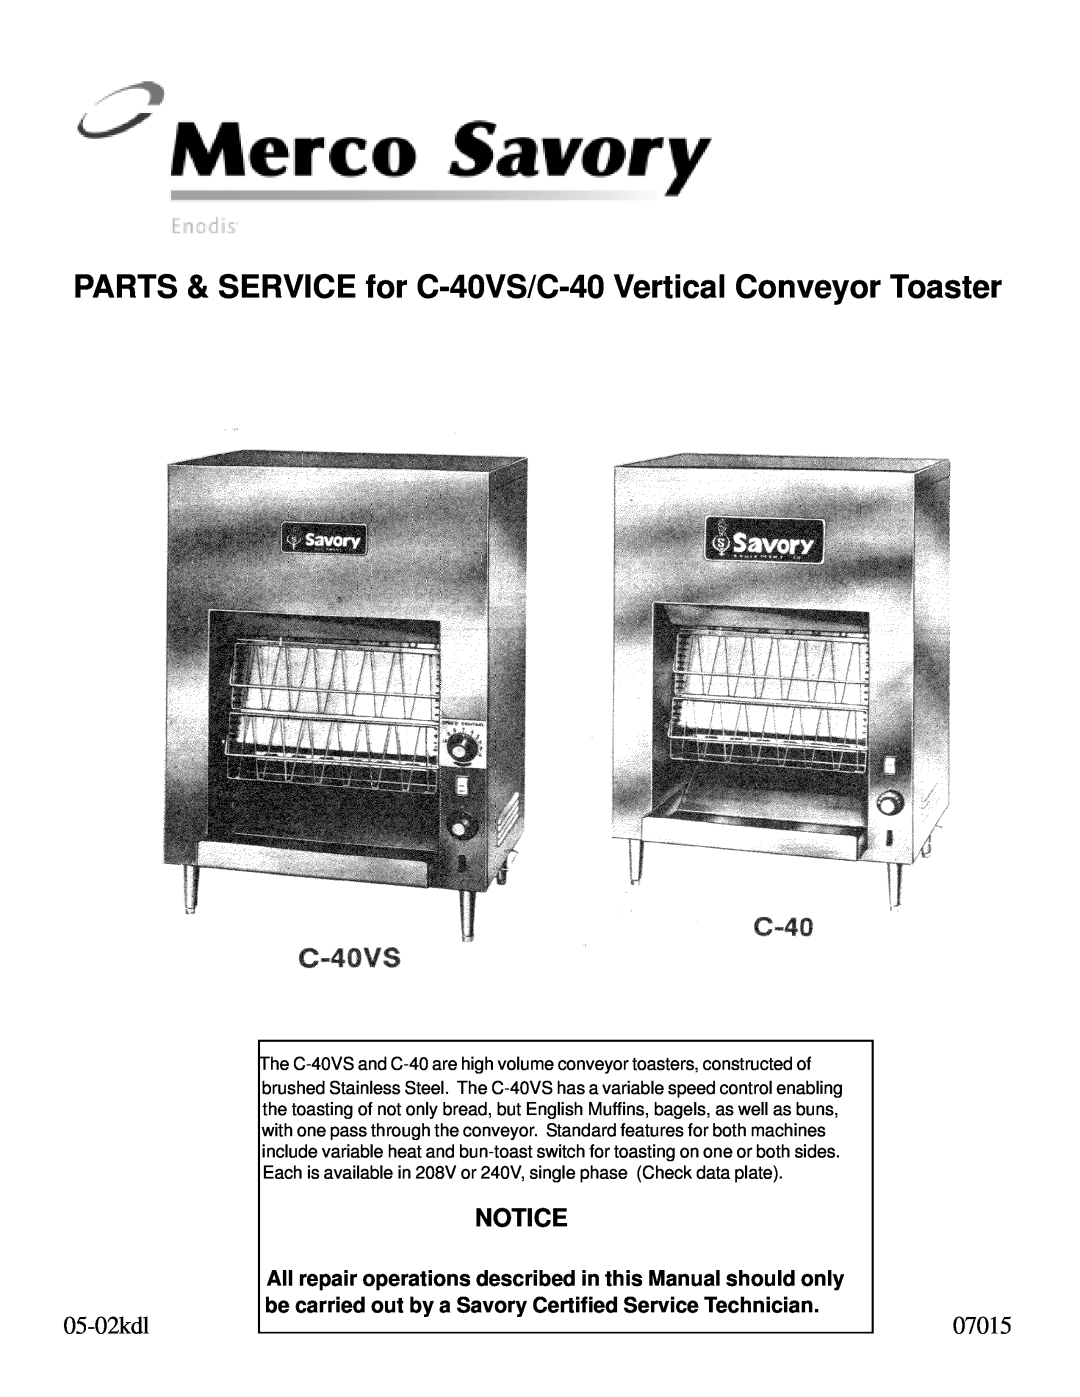 Merco Savory C-40 manual 05-02kdl, 07015 